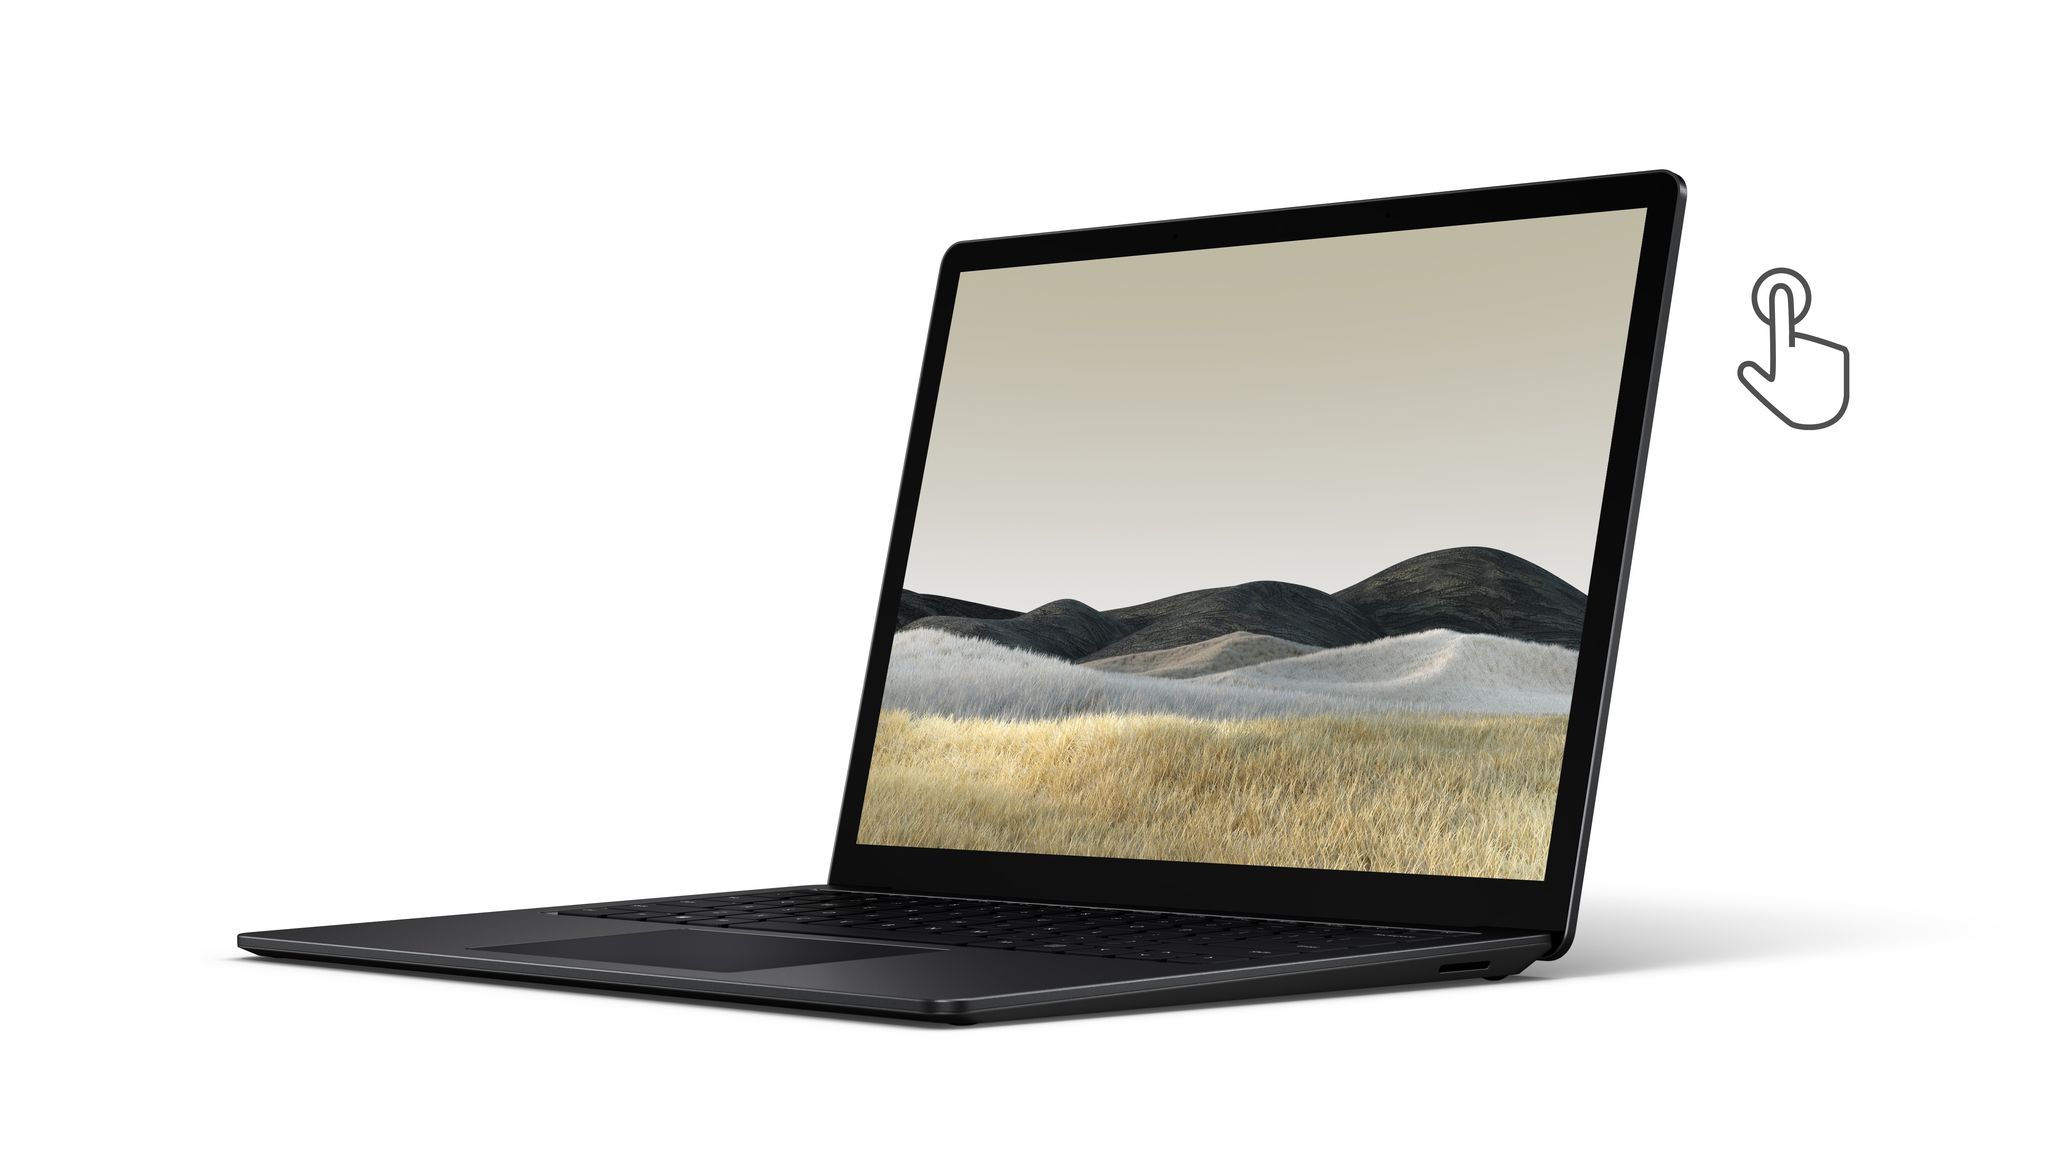 Microsoft Surface Laptop 3, 13.5" Touch-Screen, Intel Core i7-1035G7, 16GB Memory, 256GB SSD, Iris Plus Graphics 950, Windows 10 Home, Matte Black, VEF-00022 - image 1 of 6